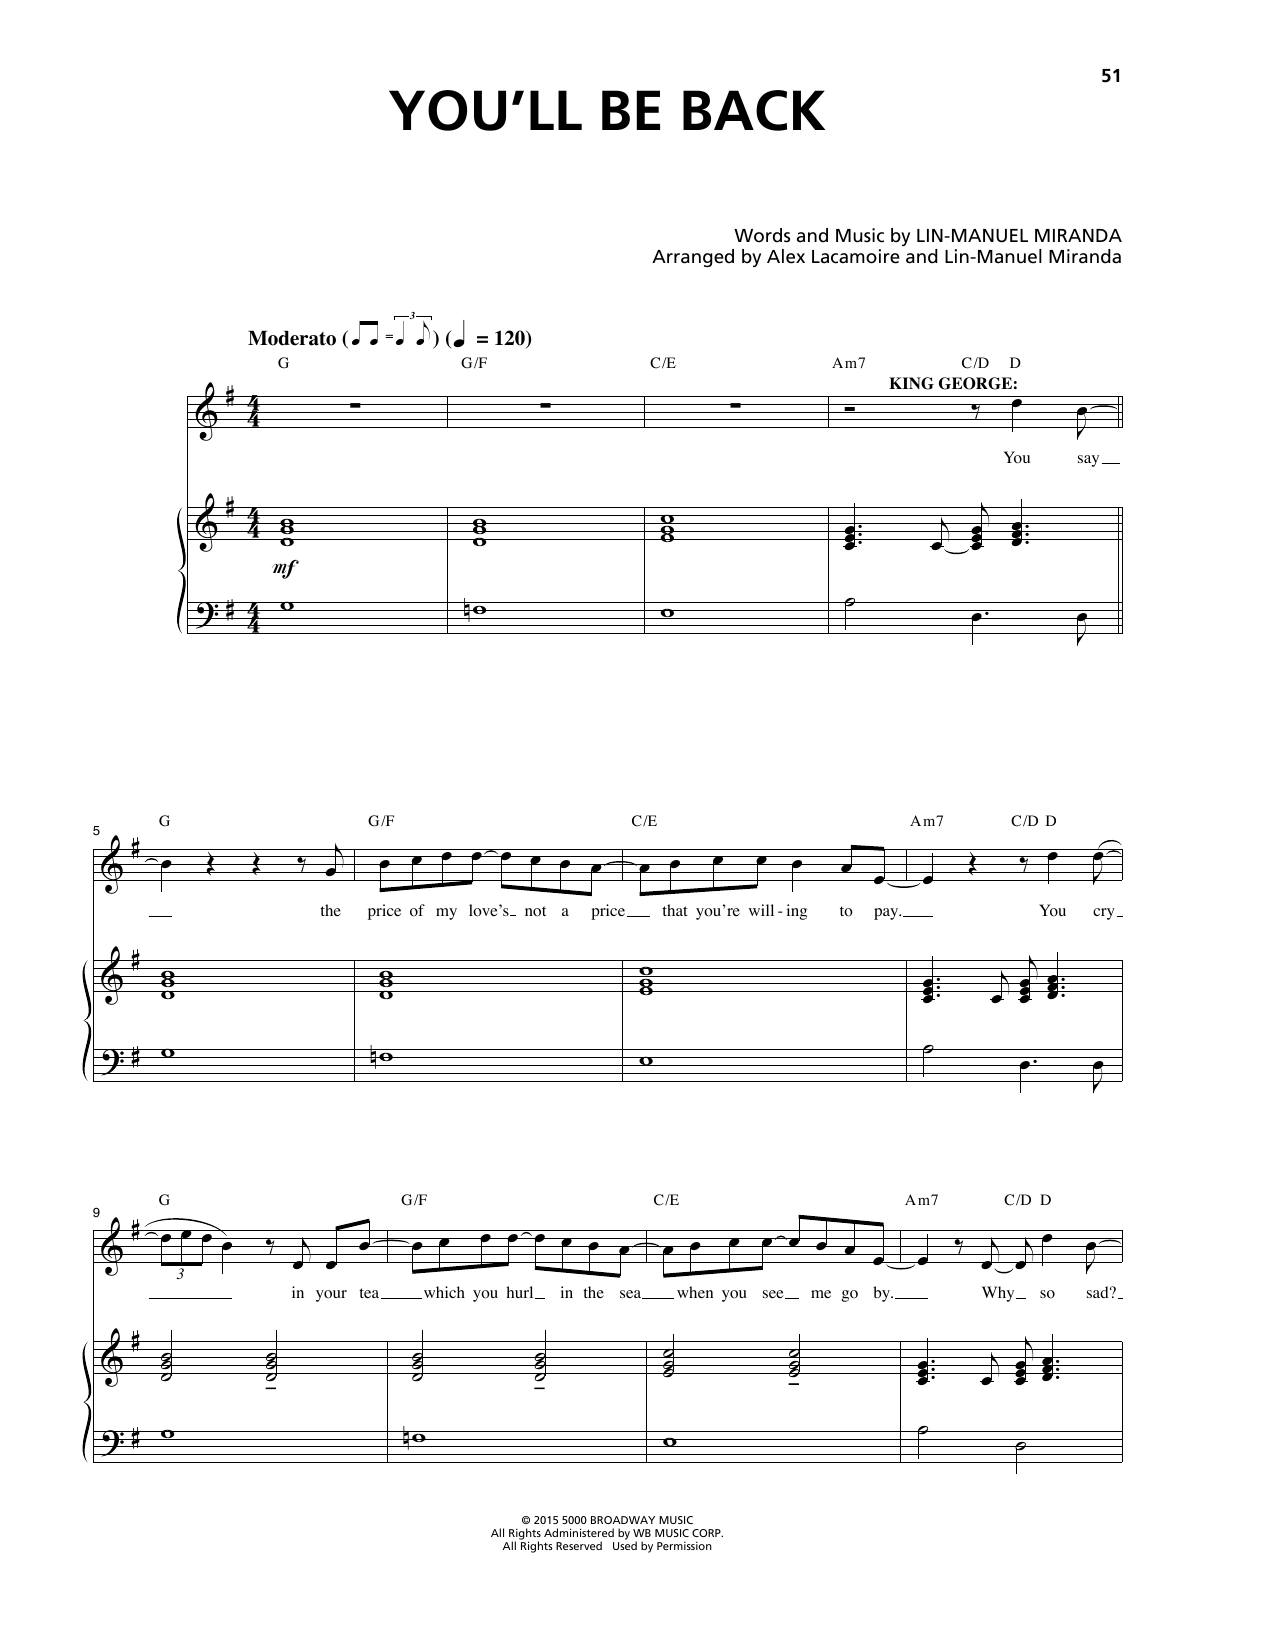 Lin-Manuel Miranda You'll Be Back (from Hamilton) Sheet Music Notes & Chords for Violin Solo - Download or Print PDF